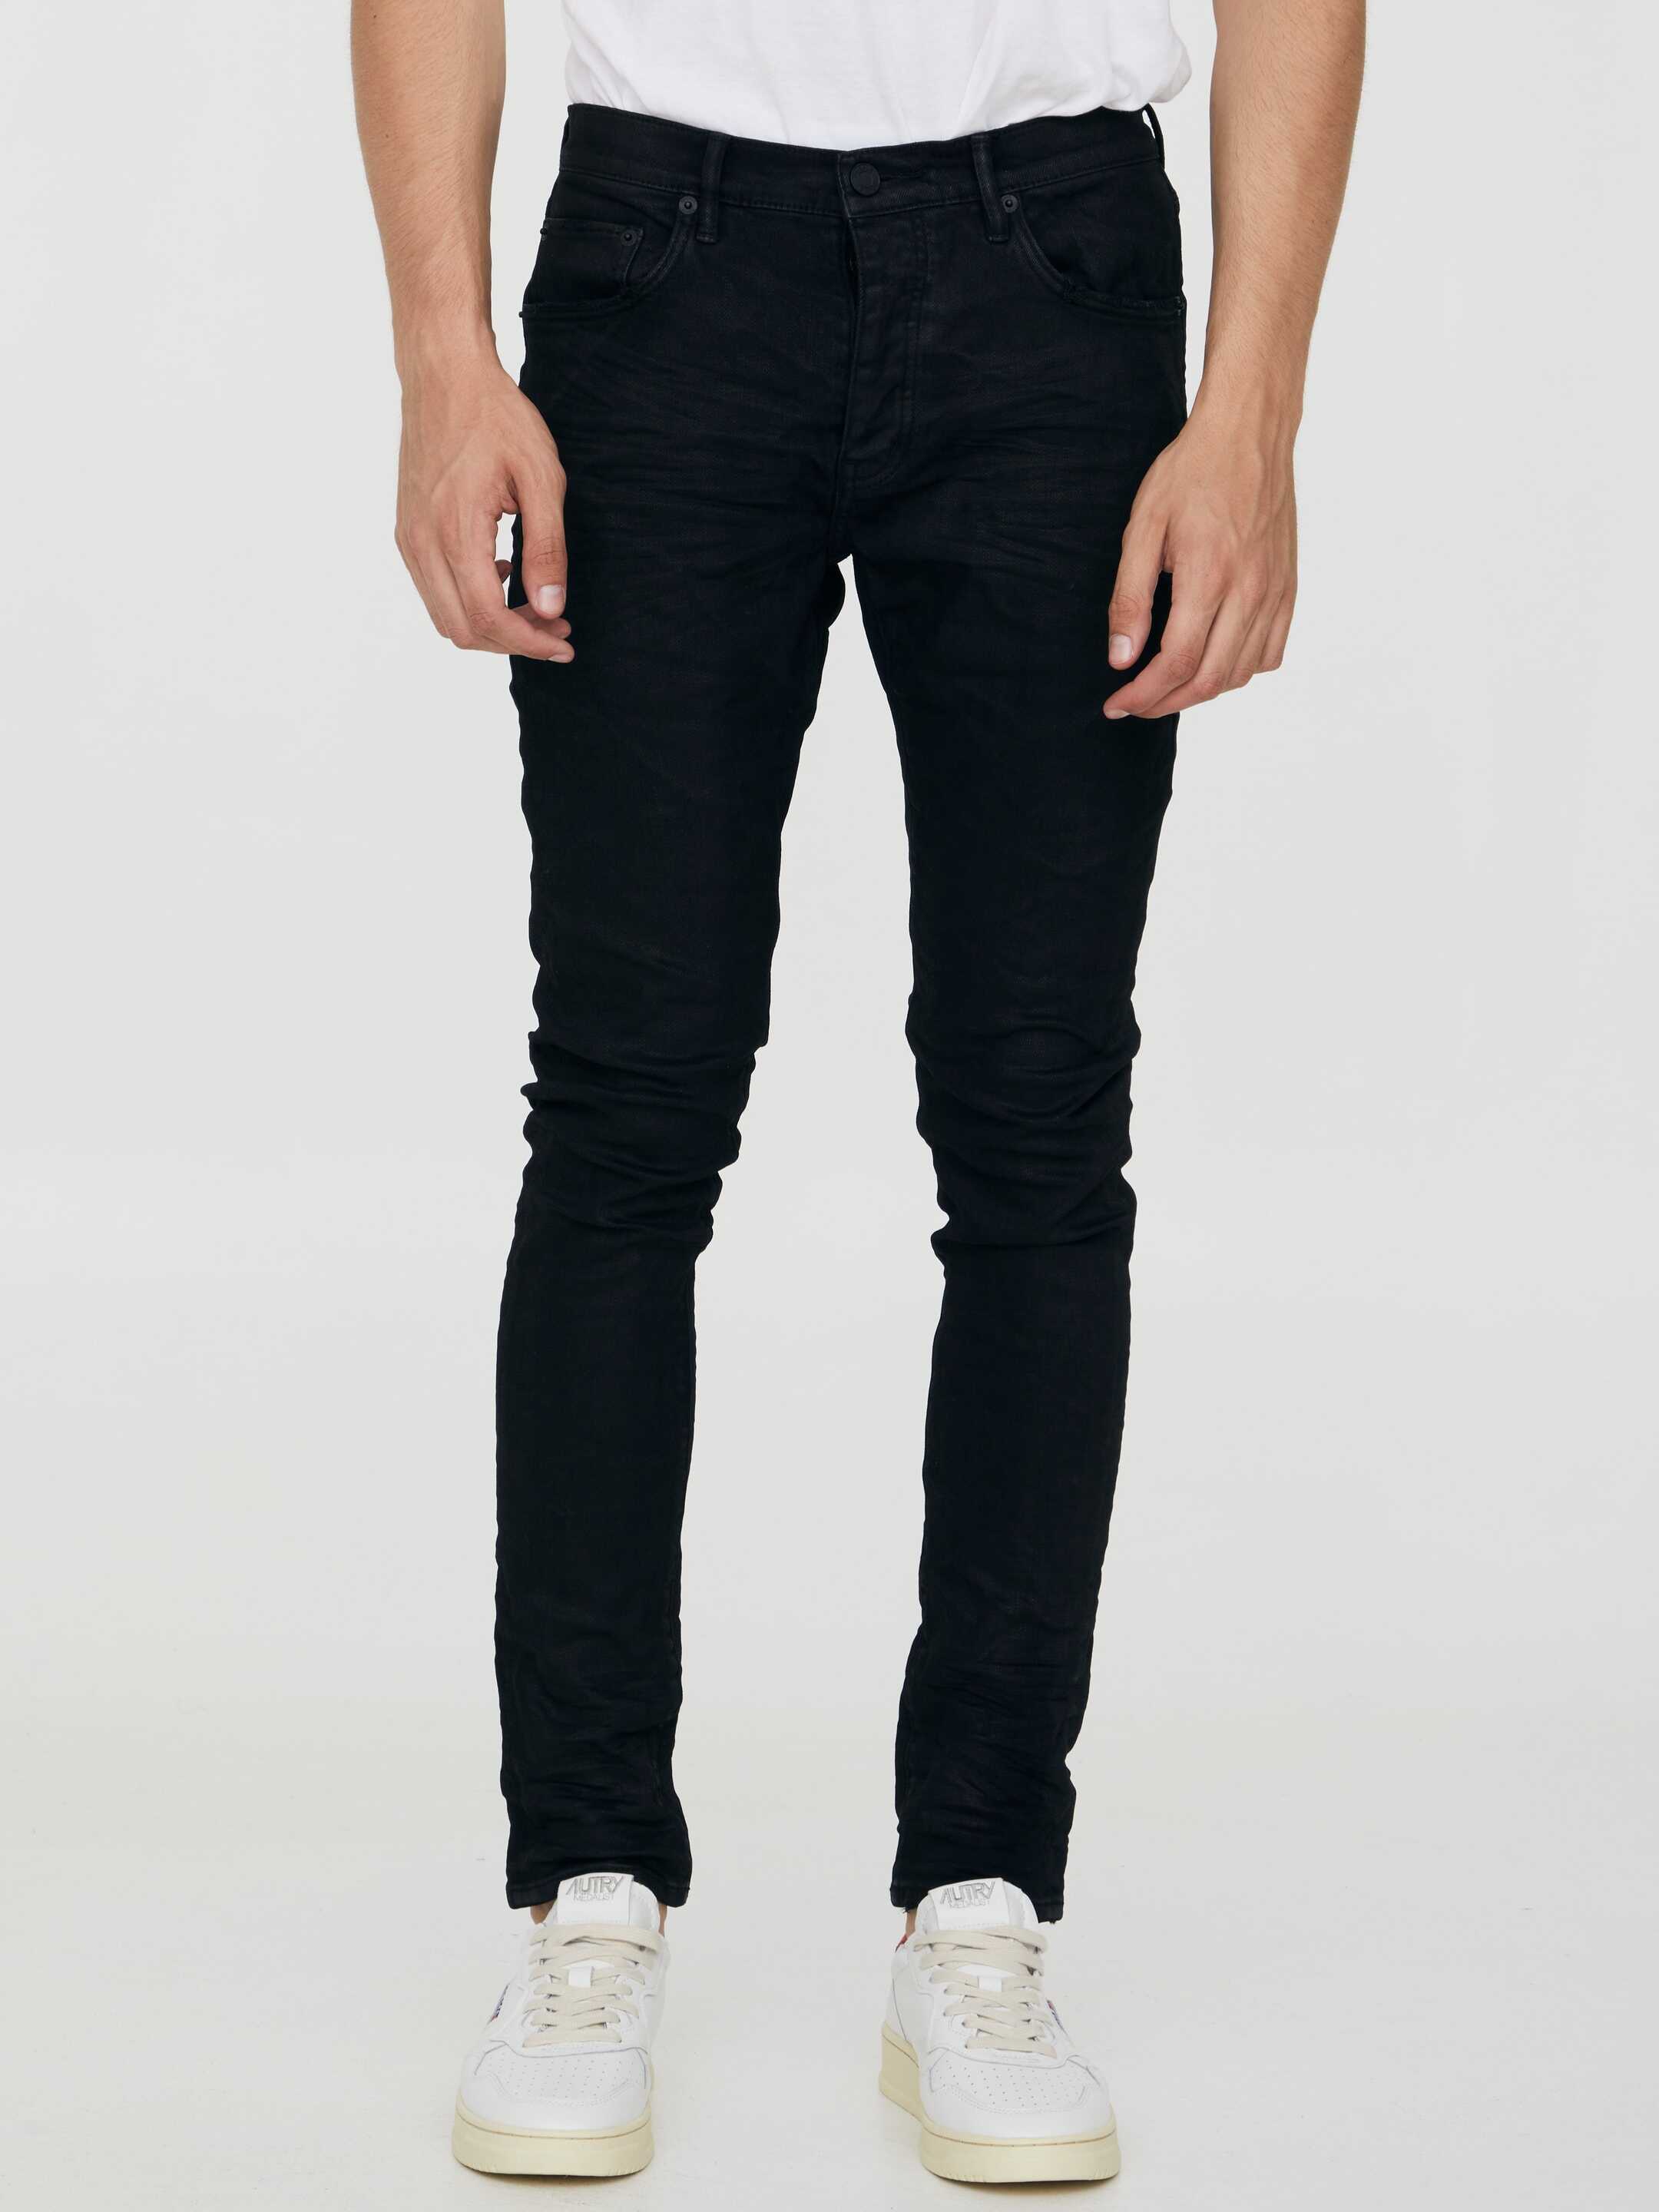 PURPLE BRAND Denim Jeans Black